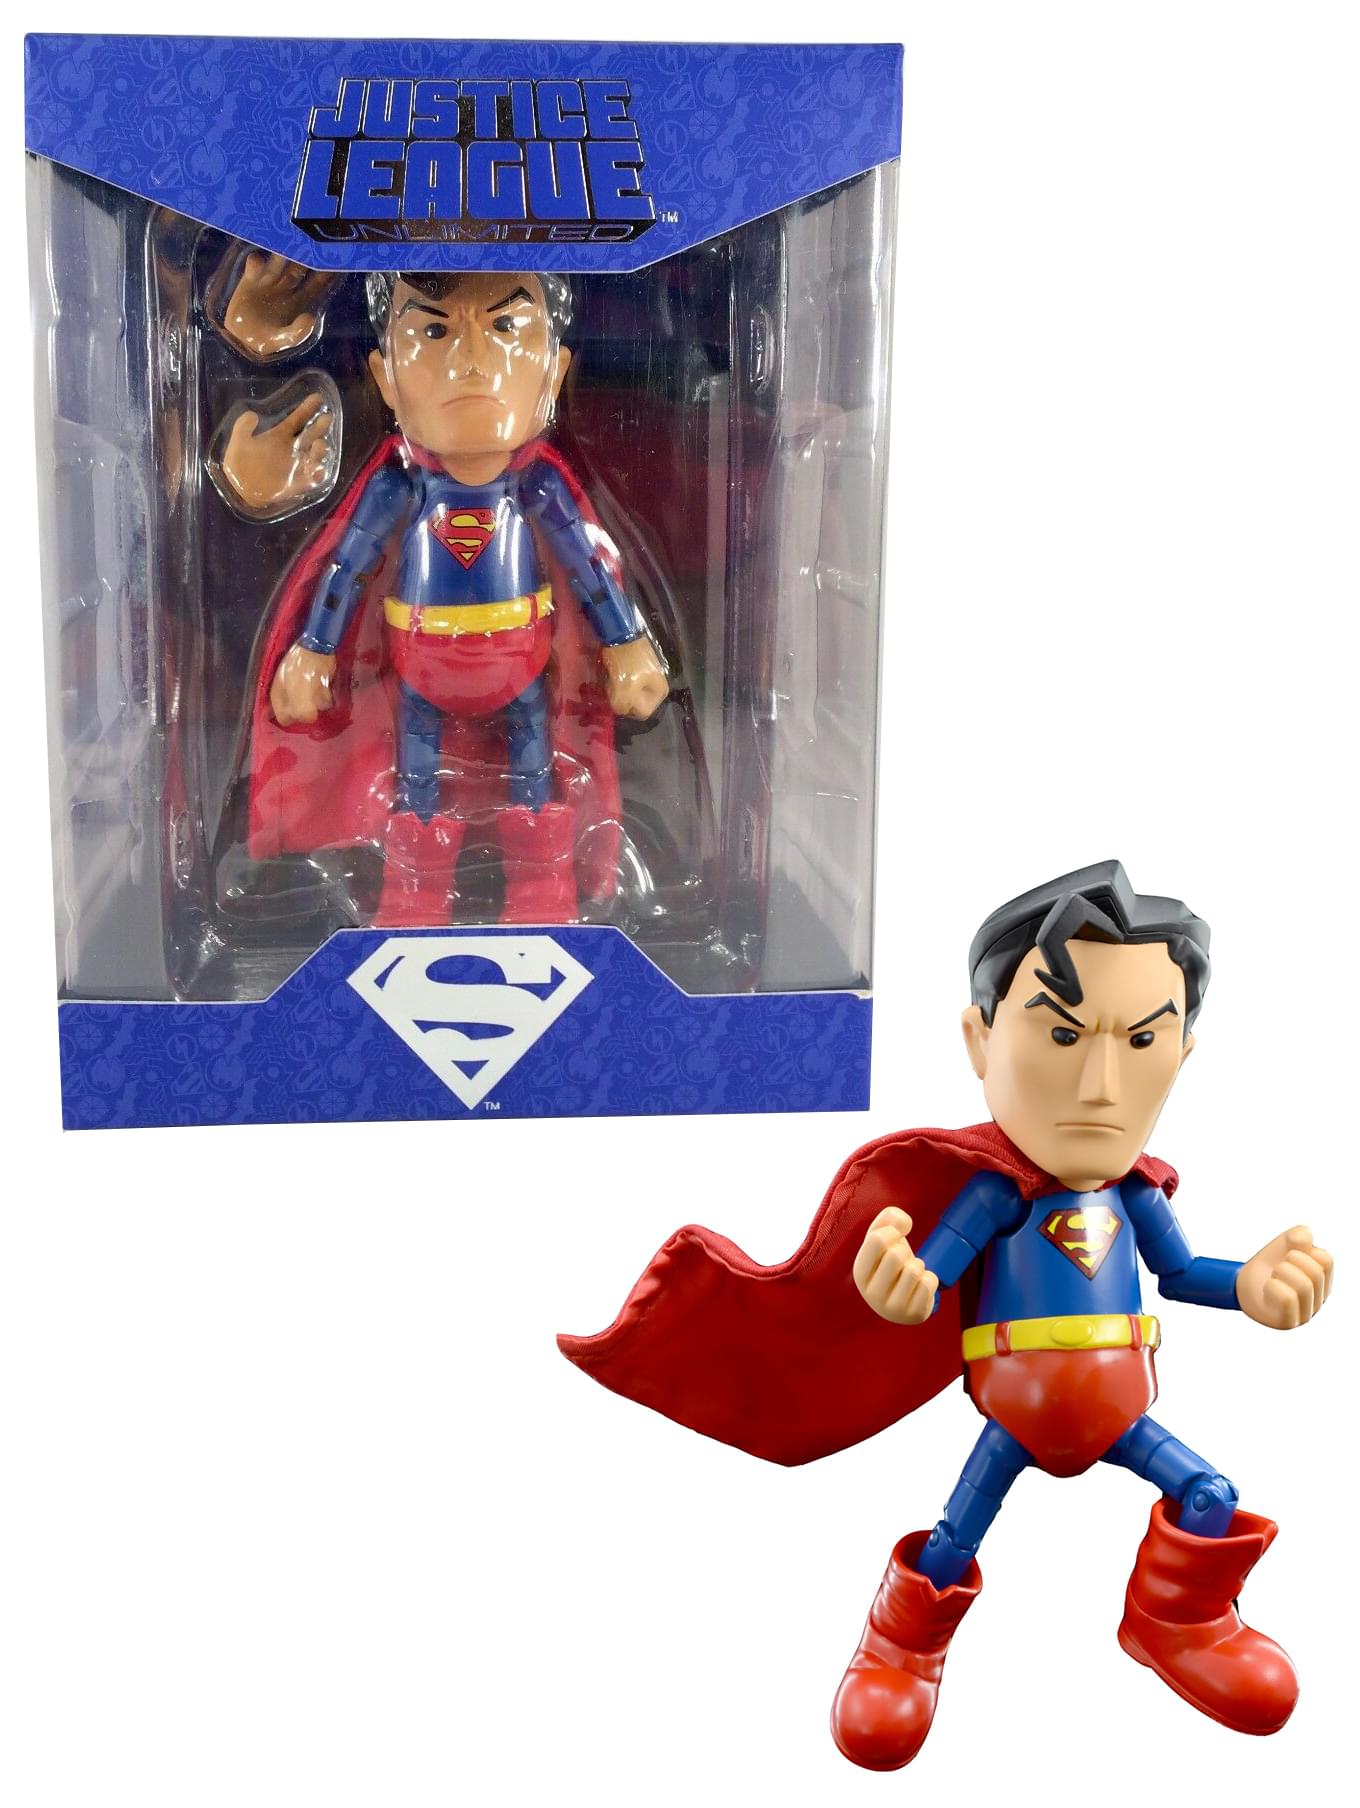 DC Comics Hybrid Metal Figuration Action Figure | #007 Superman